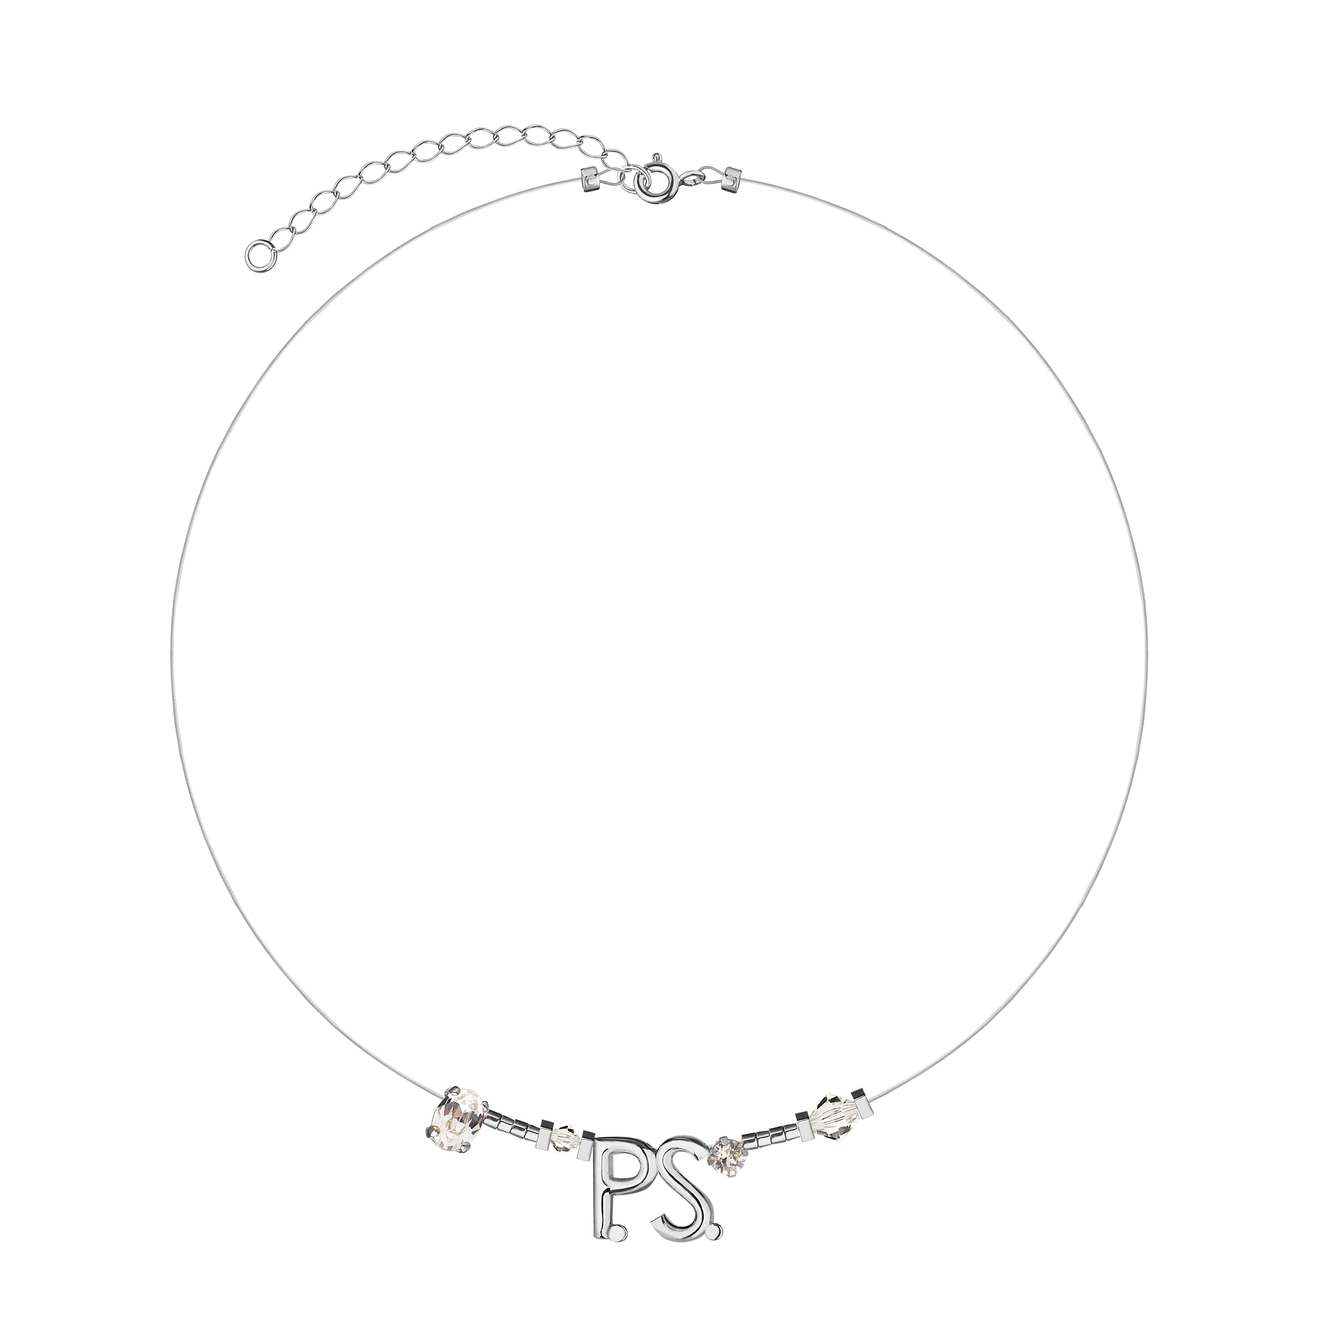 Phenomenal Studio Чокер с фирменным логотипом и кристаллами P.S. Mini Rhodium Necklace phenomenal studio чокер с фирменным логотипом и кристаллами p s mini rhodium necklace